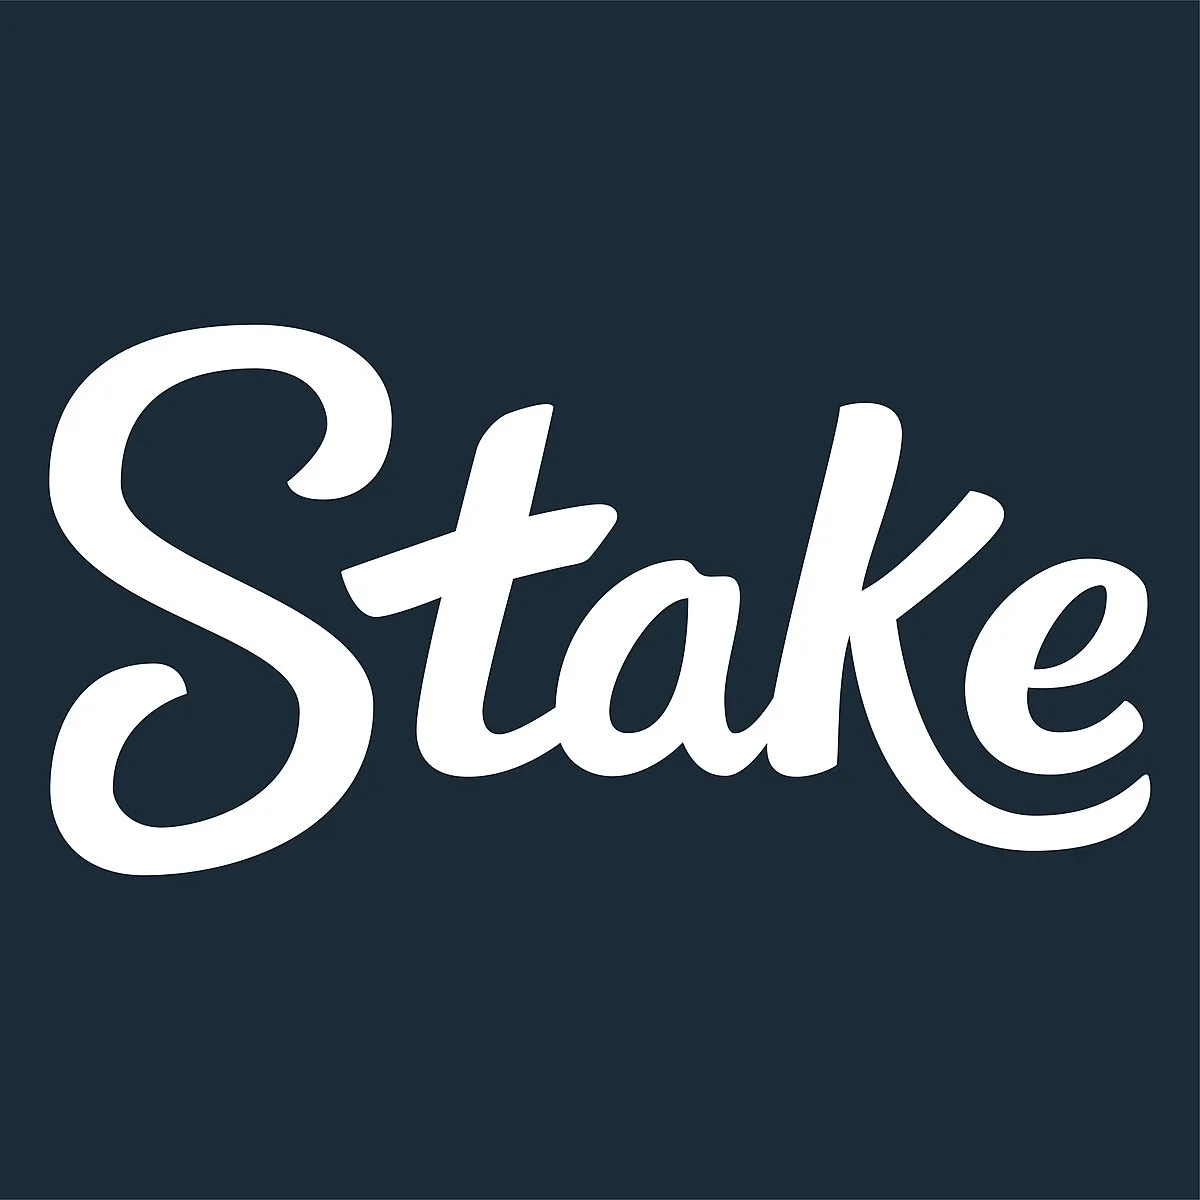 Online Casino Stake - Review, Bonuses